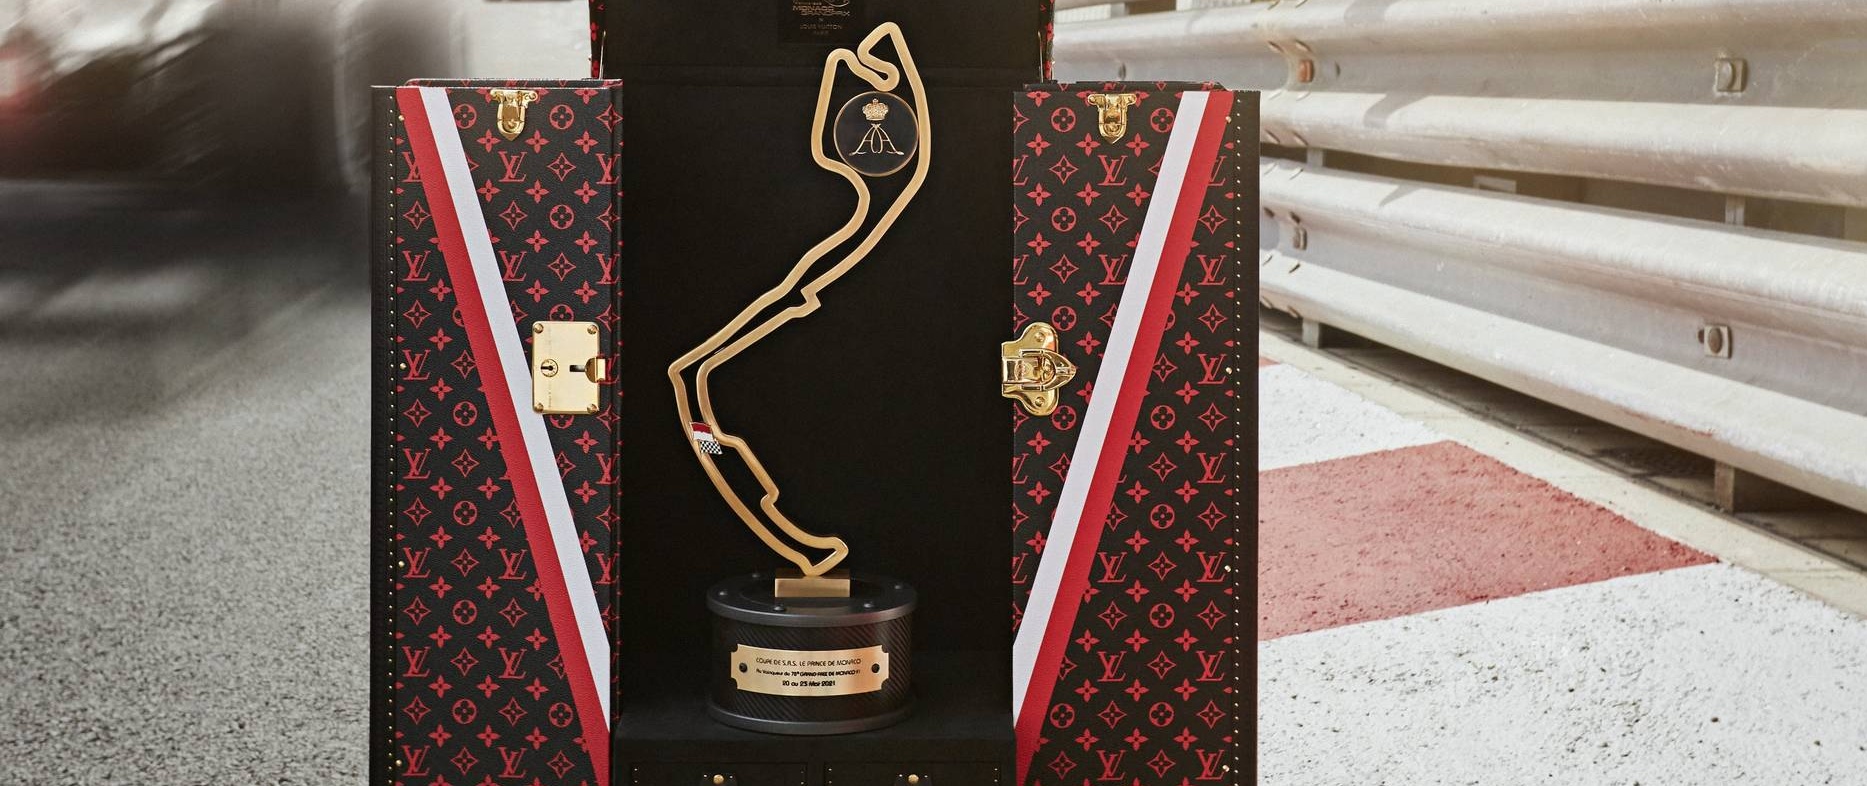 The Monaco Grand Prix Trophy Now Comes With a Louis Vuitton Trunk